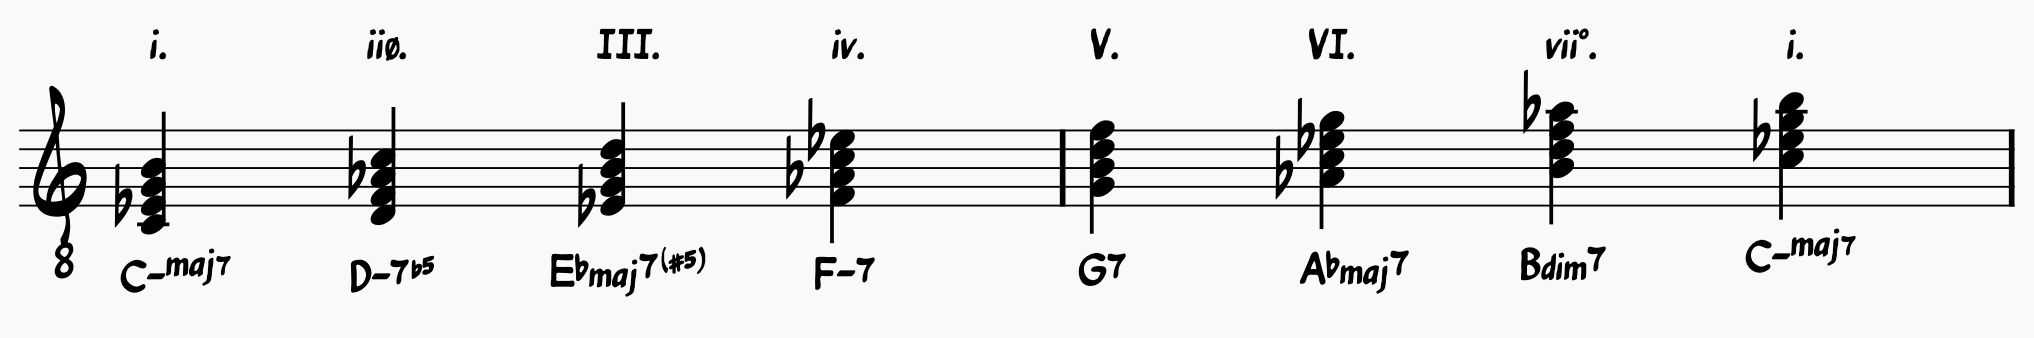 Harmonic Minor Scale harmonized in seventh chords.